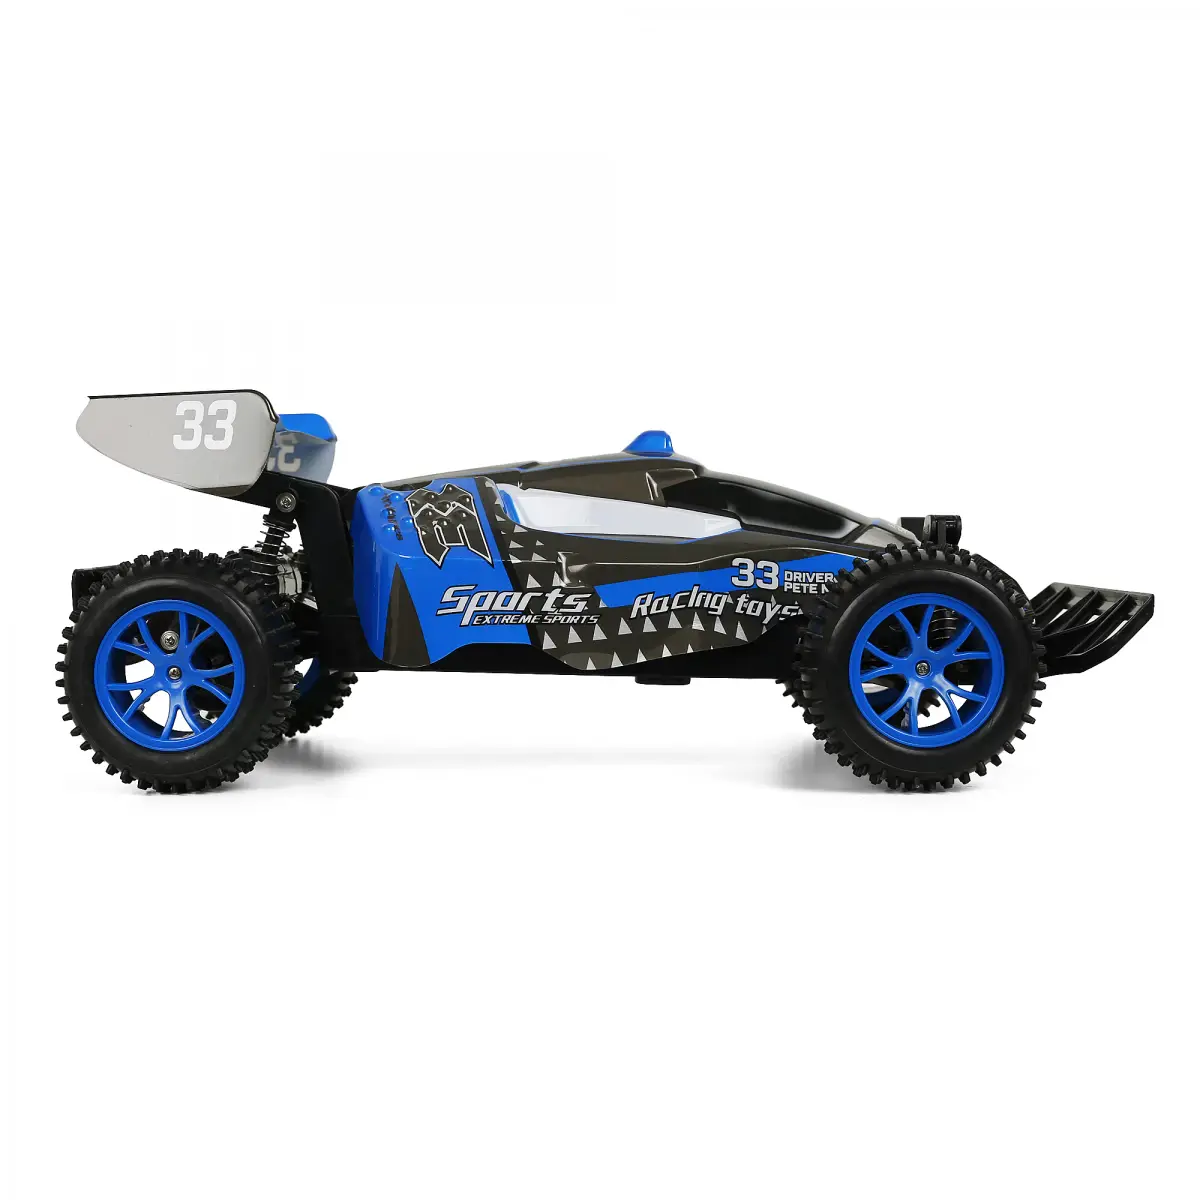 Ralleyz Remote Control Buggy Extreme Sports Speed Car, 3Y+, Blue